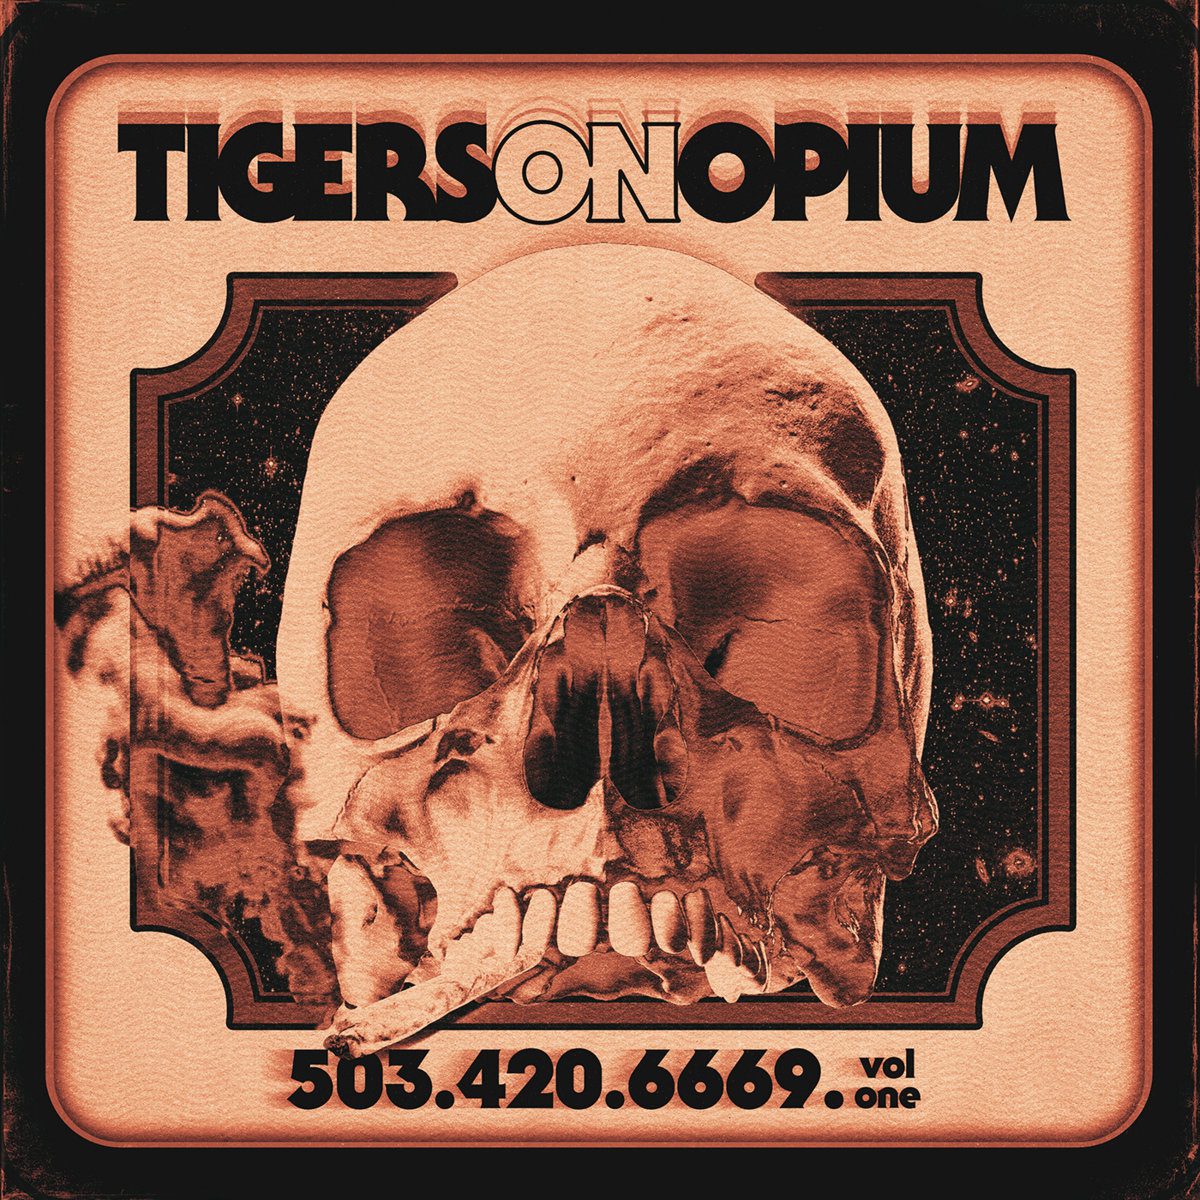 Tigers On Opium – 503.420.6669.VOL.1 EP (2021)